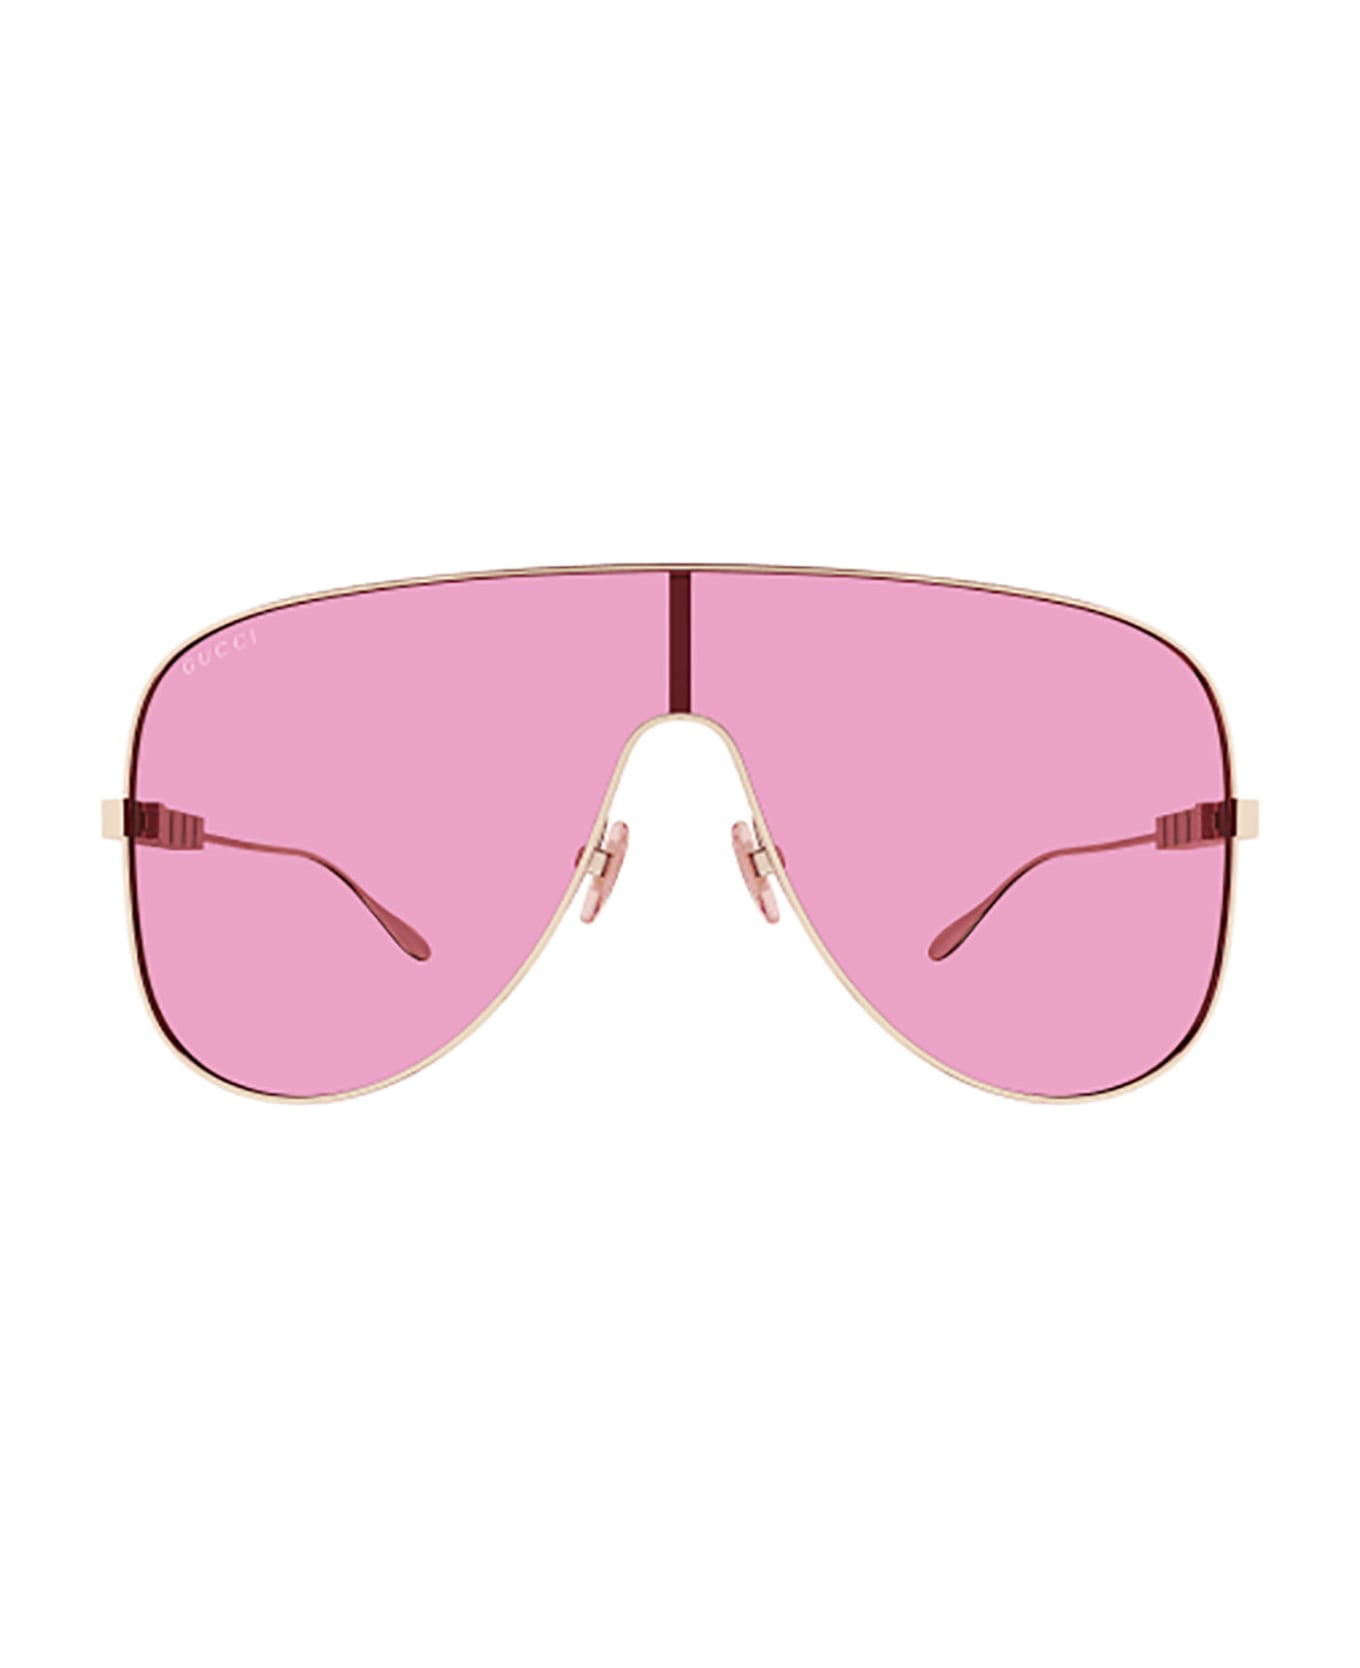 Gucci Eyewear GG1436S Sunglasses - Gold Gold Pink サングラス